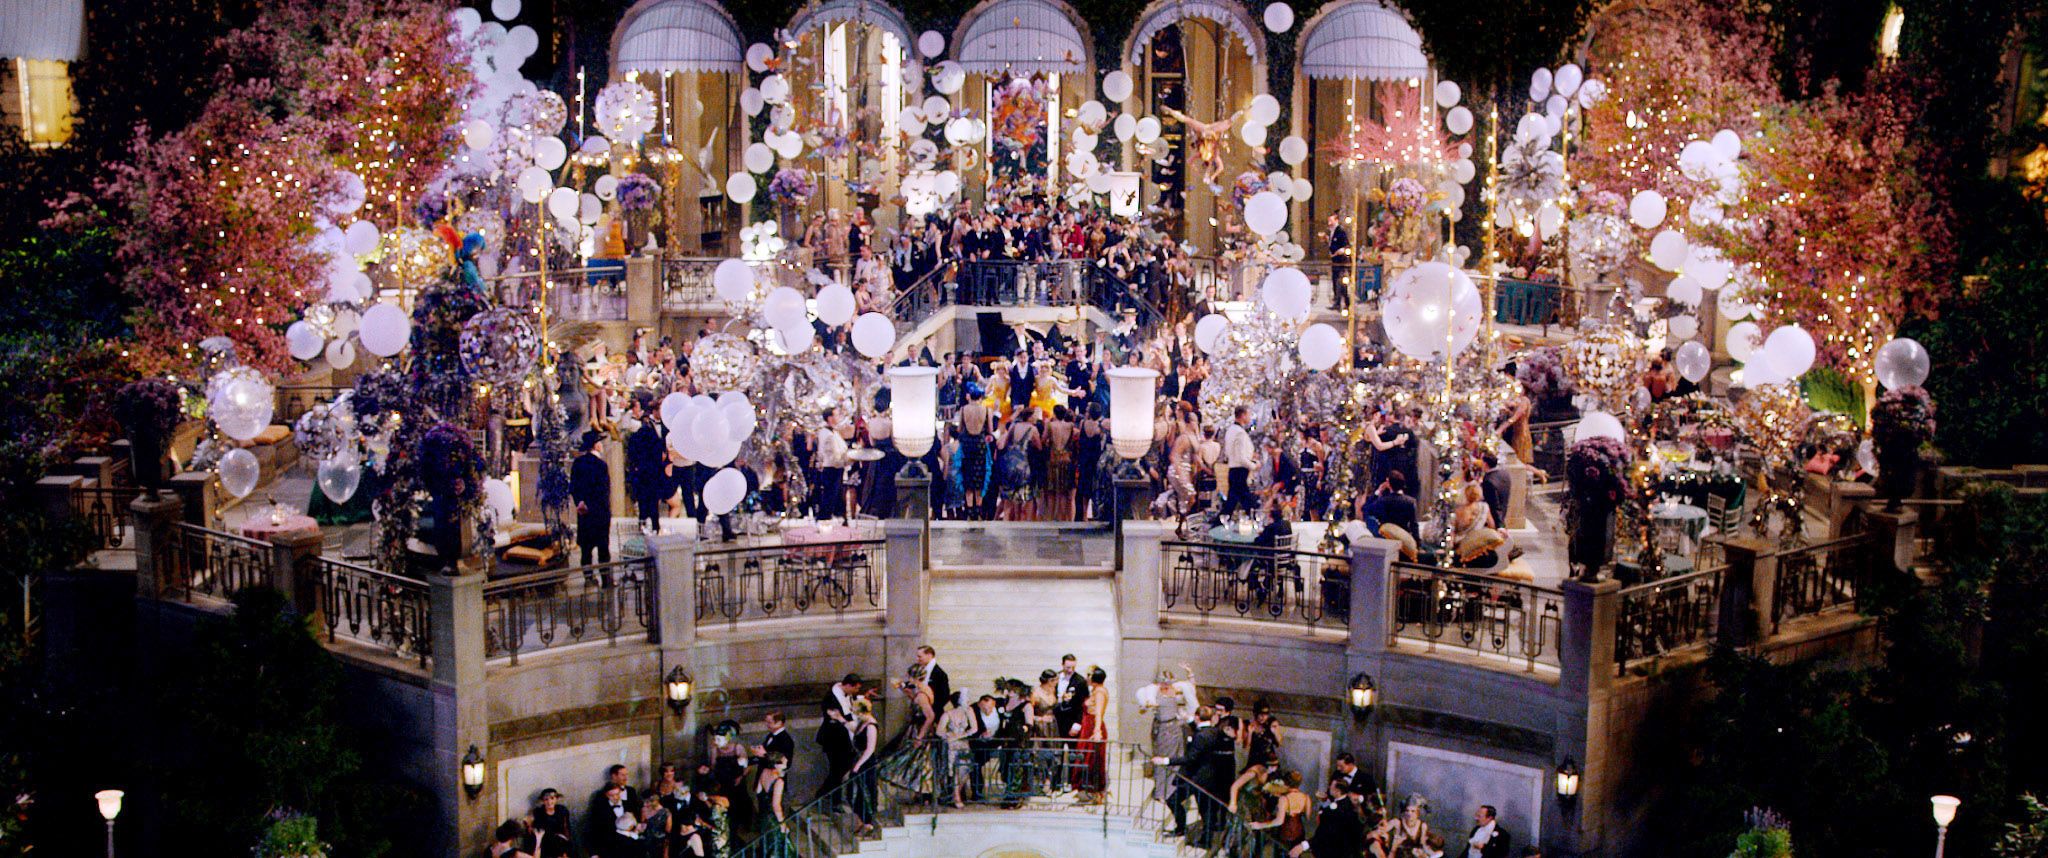 Roaring Twenties Party Decoration Ideas - Elitflat  Roaring 20s party,  Party themes, Roaring twenties party